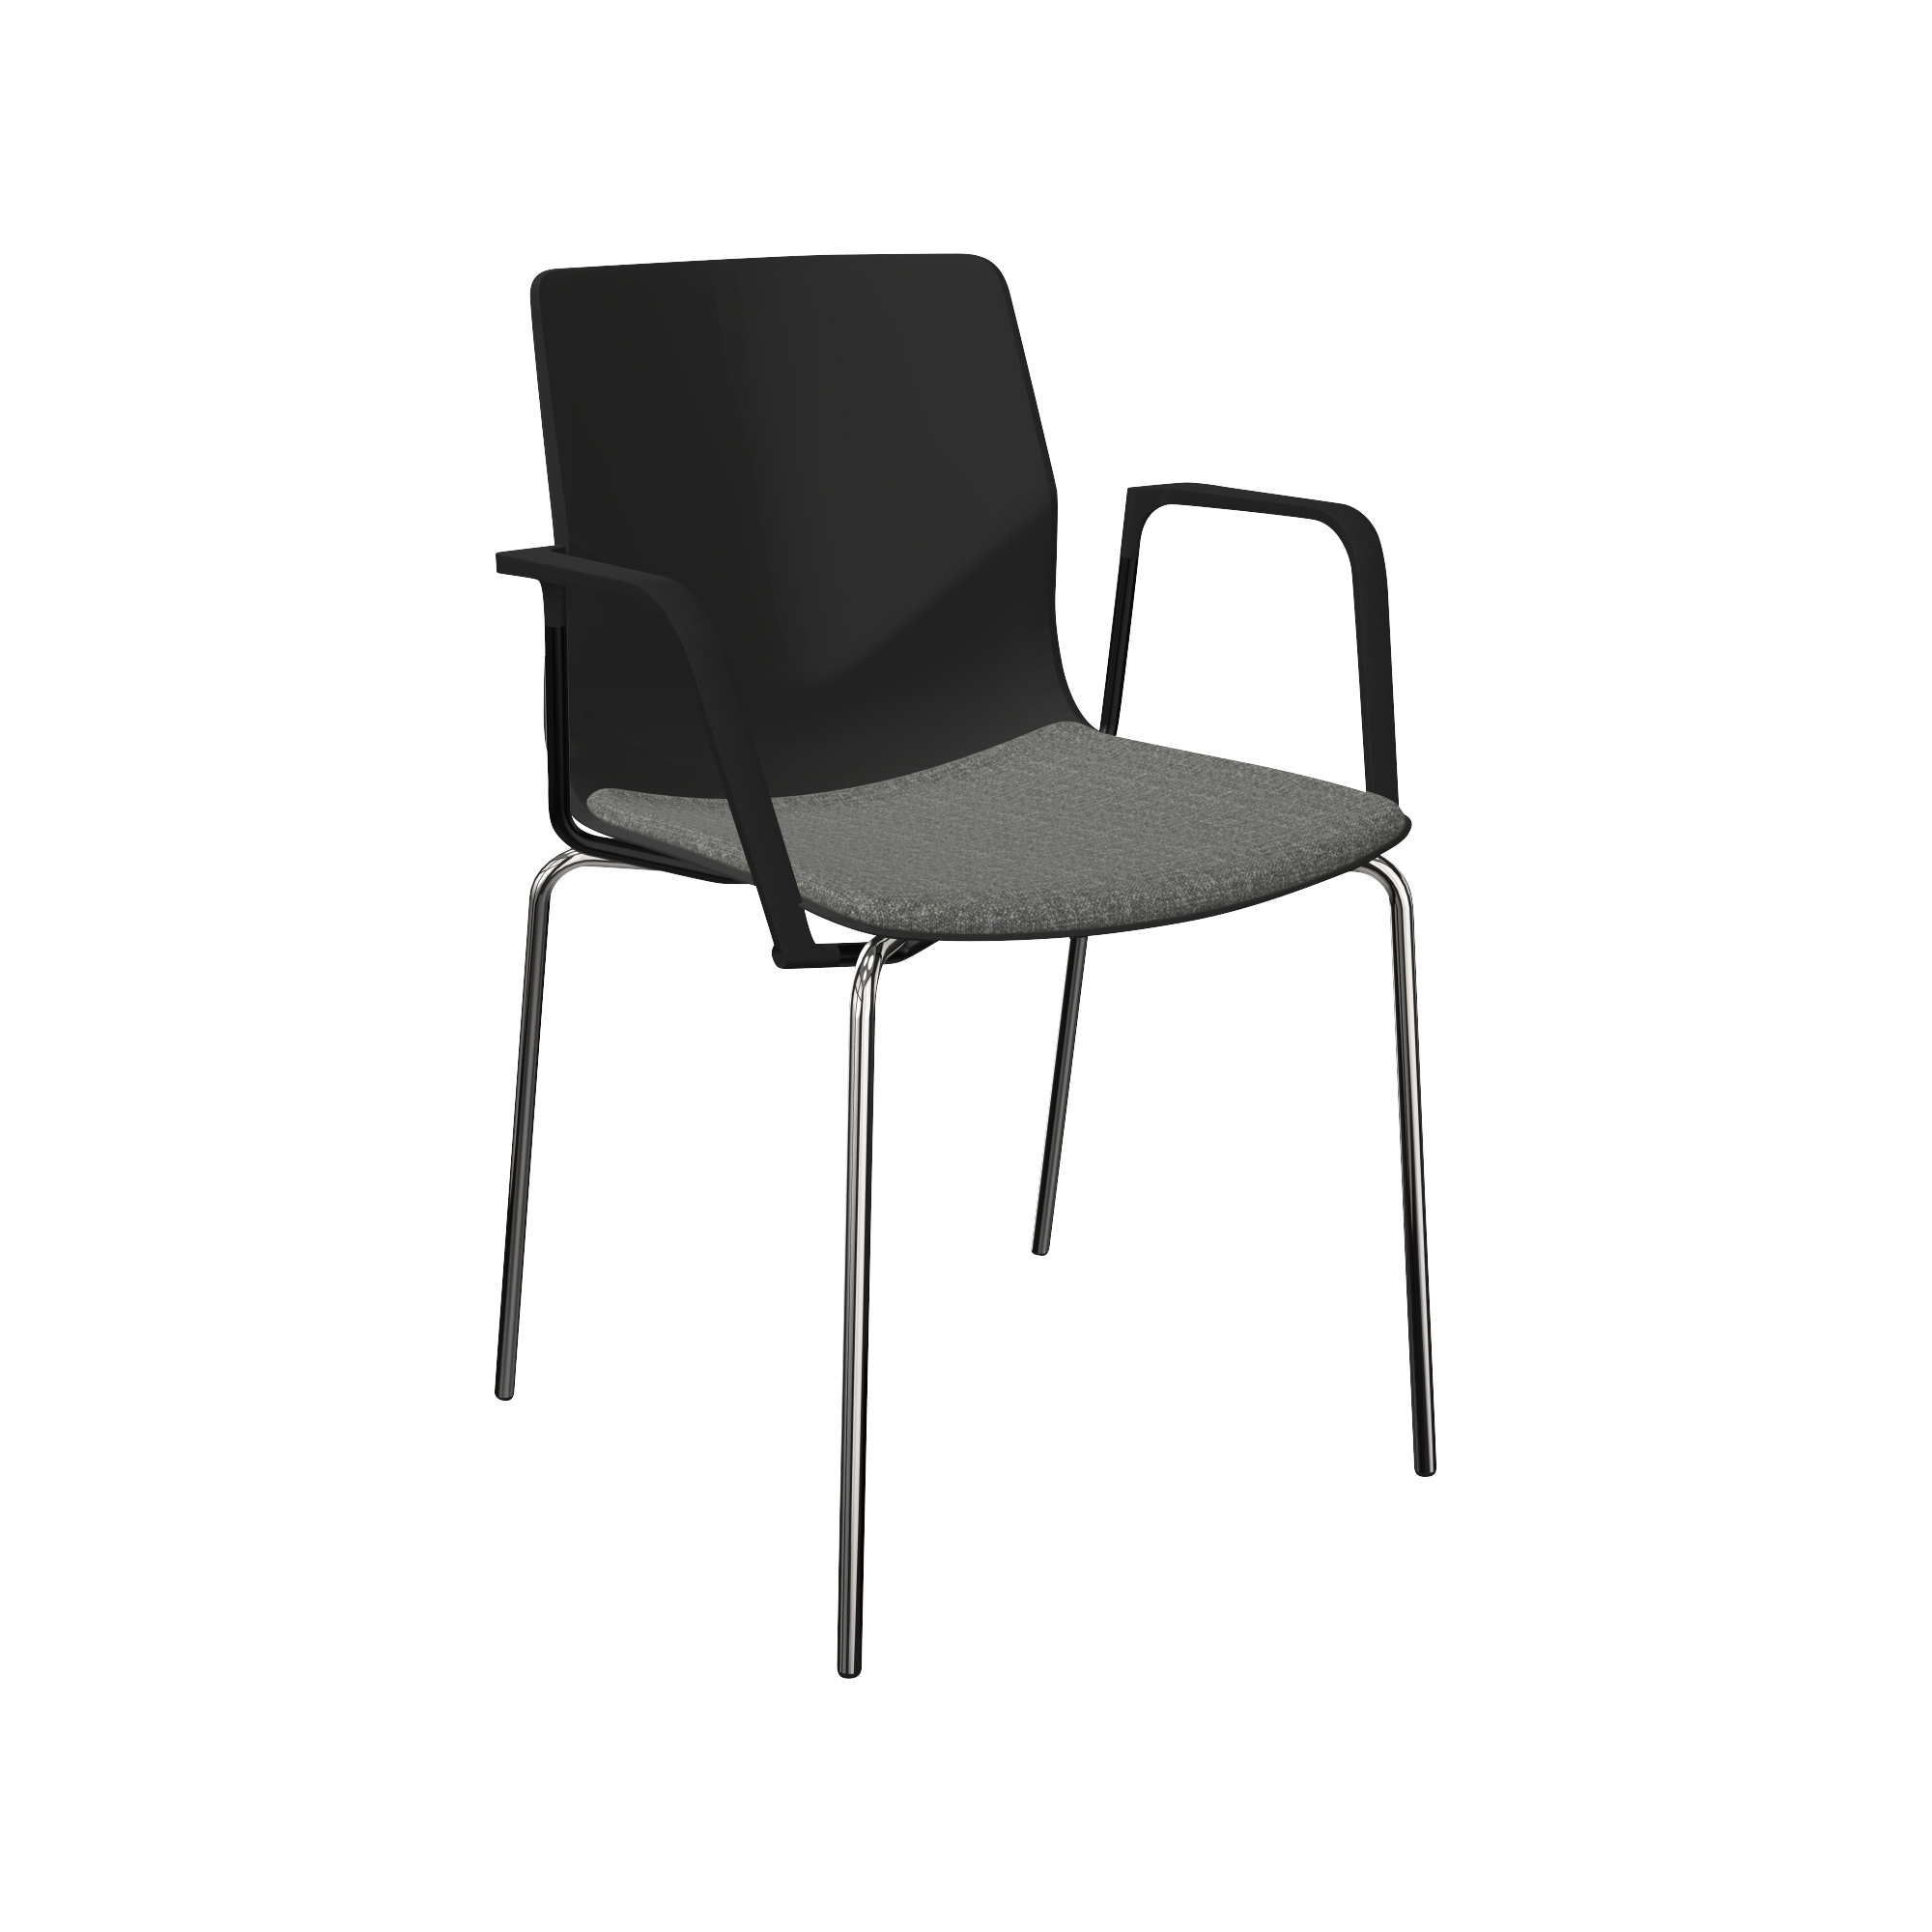 A black designer desk chair with metal legs